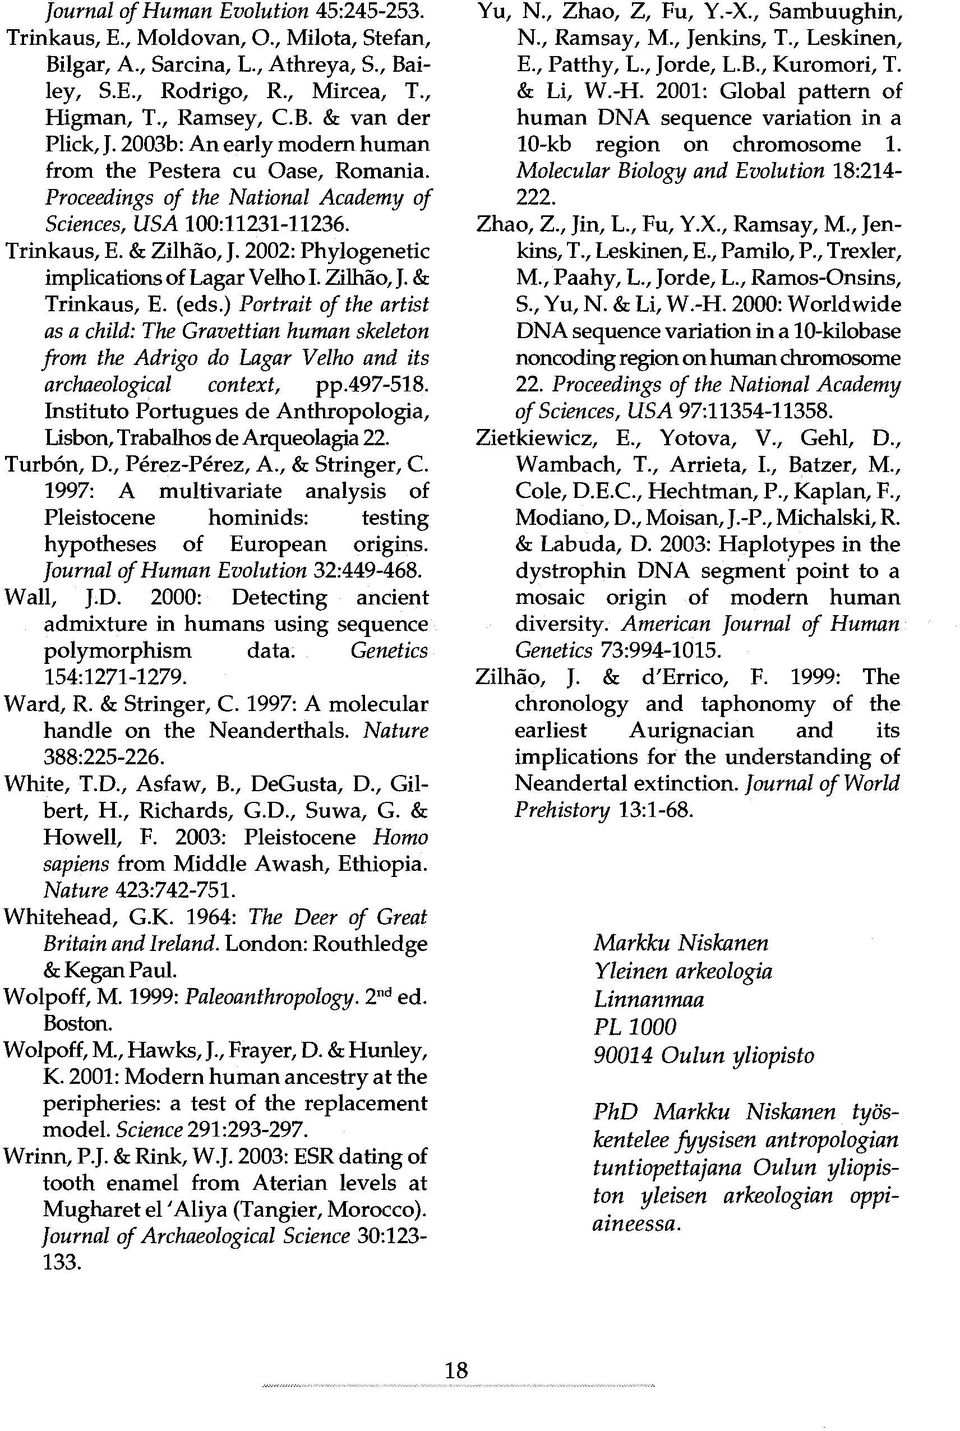 2002: Phylogenetic implications of Lagar Velho I. Zilhäo, J. & Trinkaus, E. (eds.